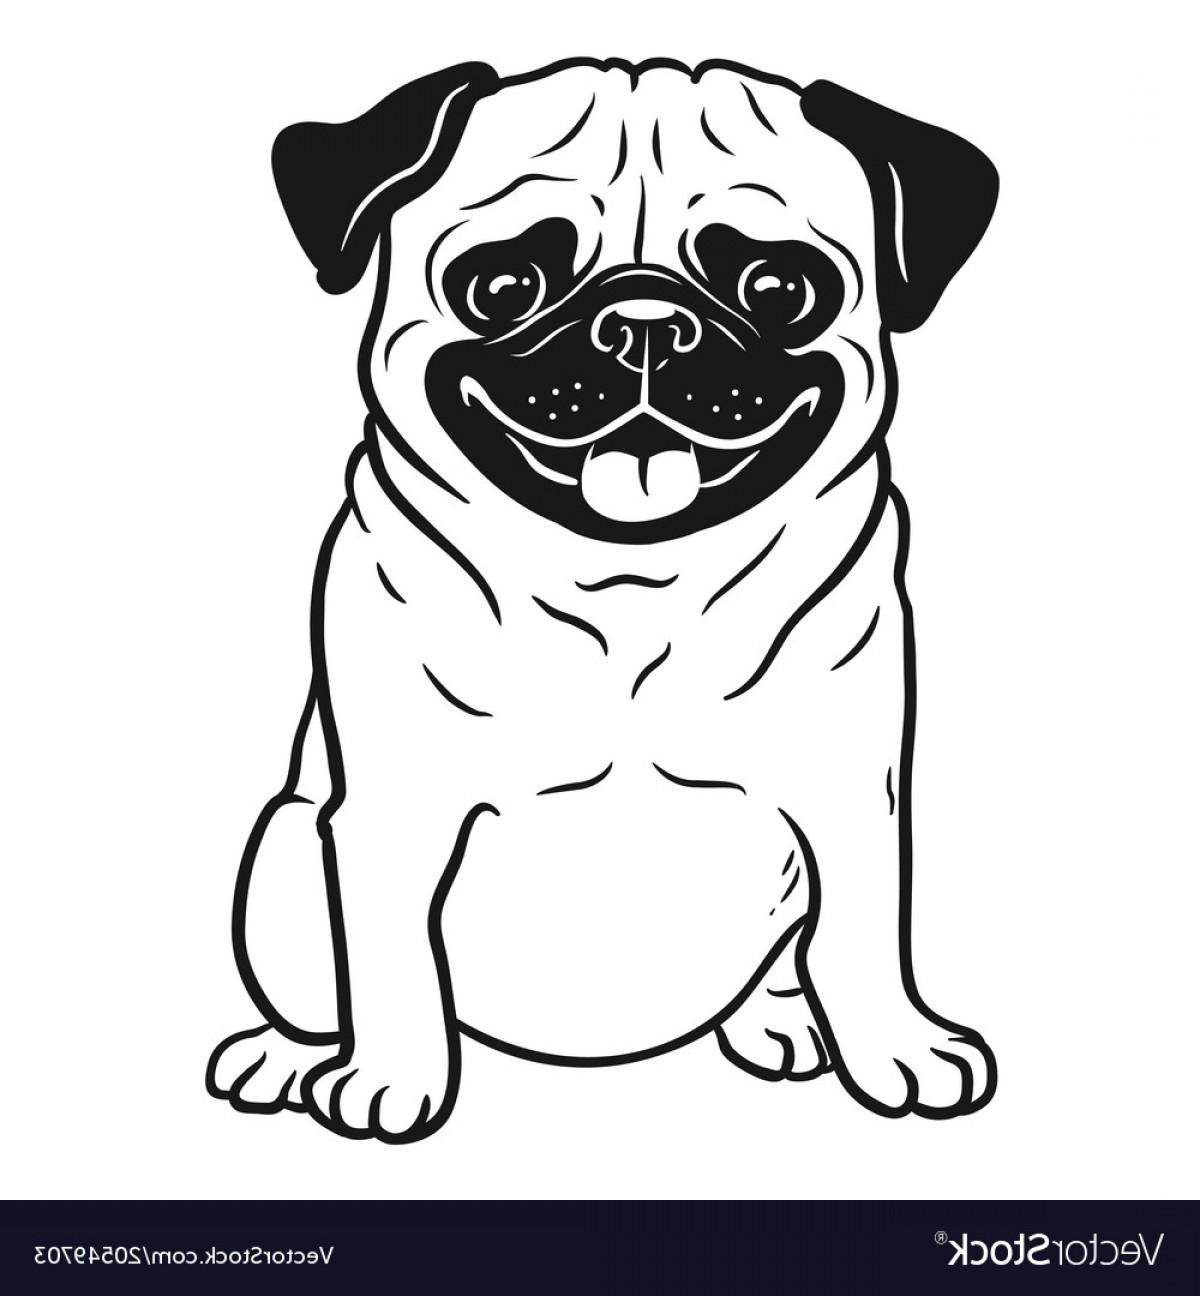 Pug Dog Black And White Hand Drawn Cartoon Vector